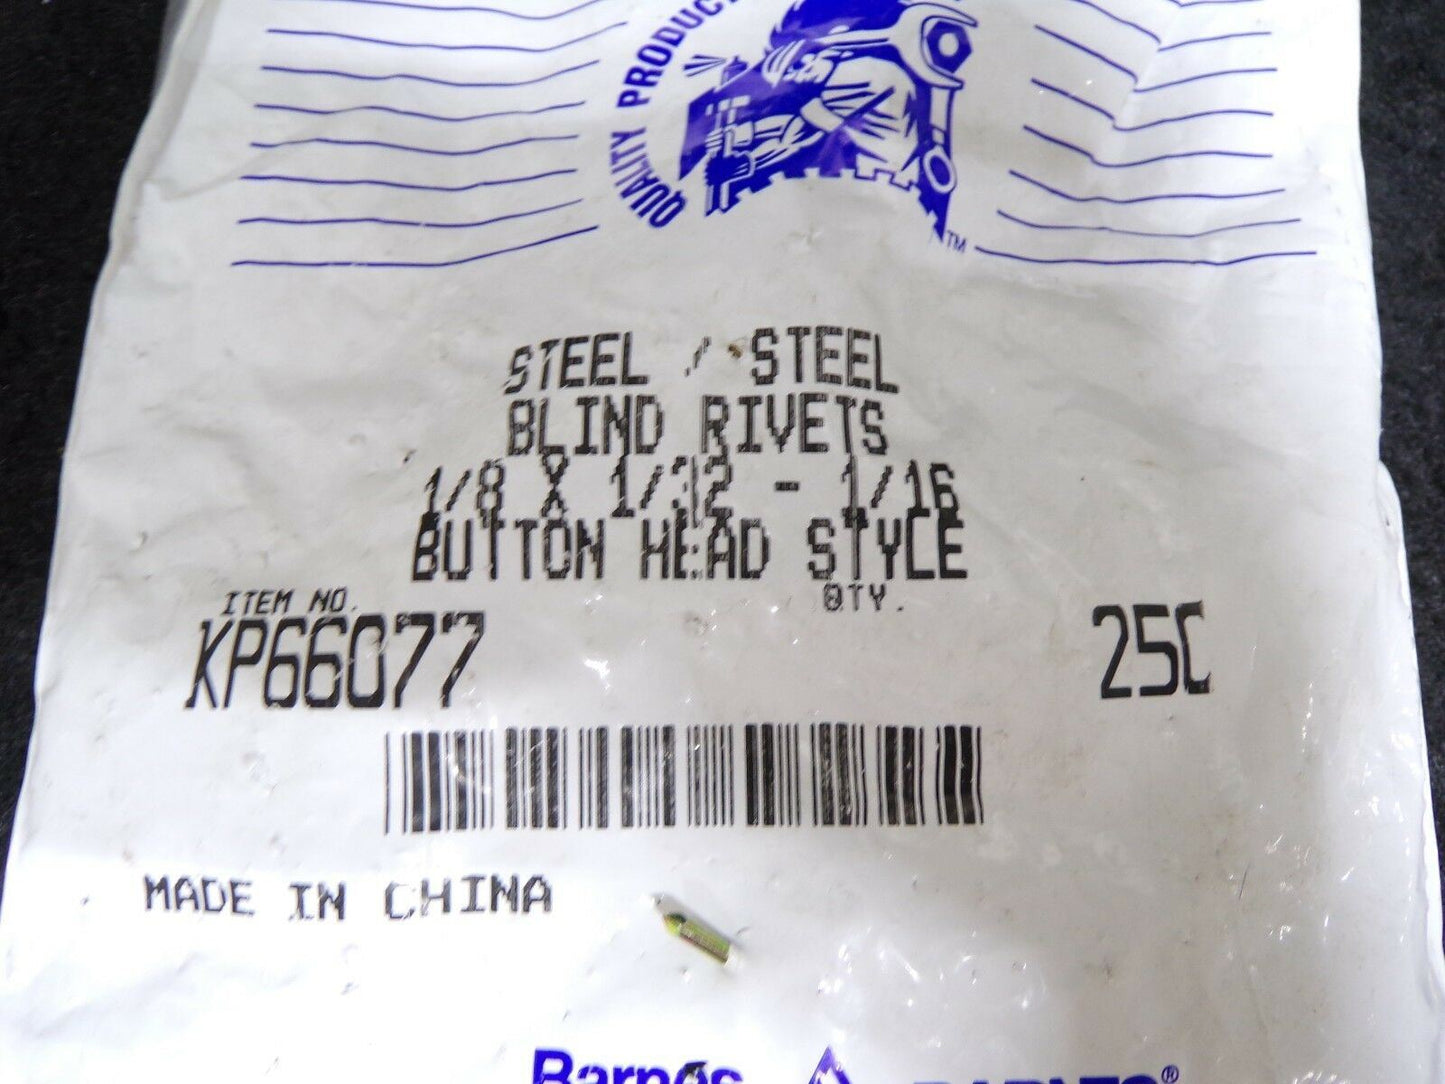 Steel/Steel Blind Rivets 1/8 x 1/32 - 1/16 Button Head Style QTY-250 (183309595659-2F23 (A))